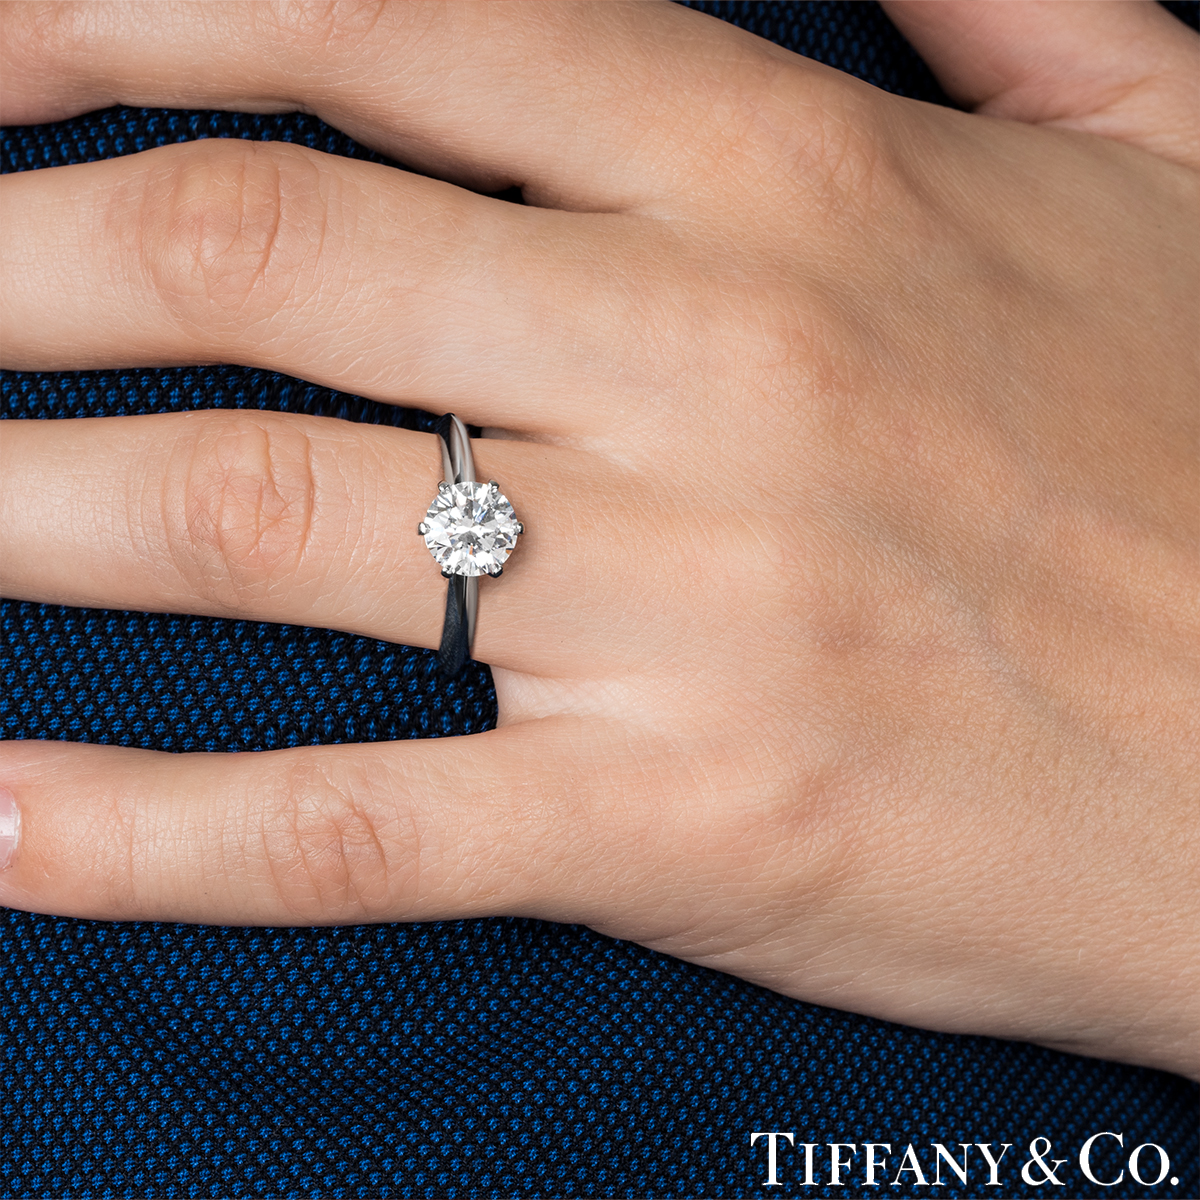 Tiffany & Co. Platinum Round Brilliant Cut Diamond Setting Ring 1.09ct D/IF